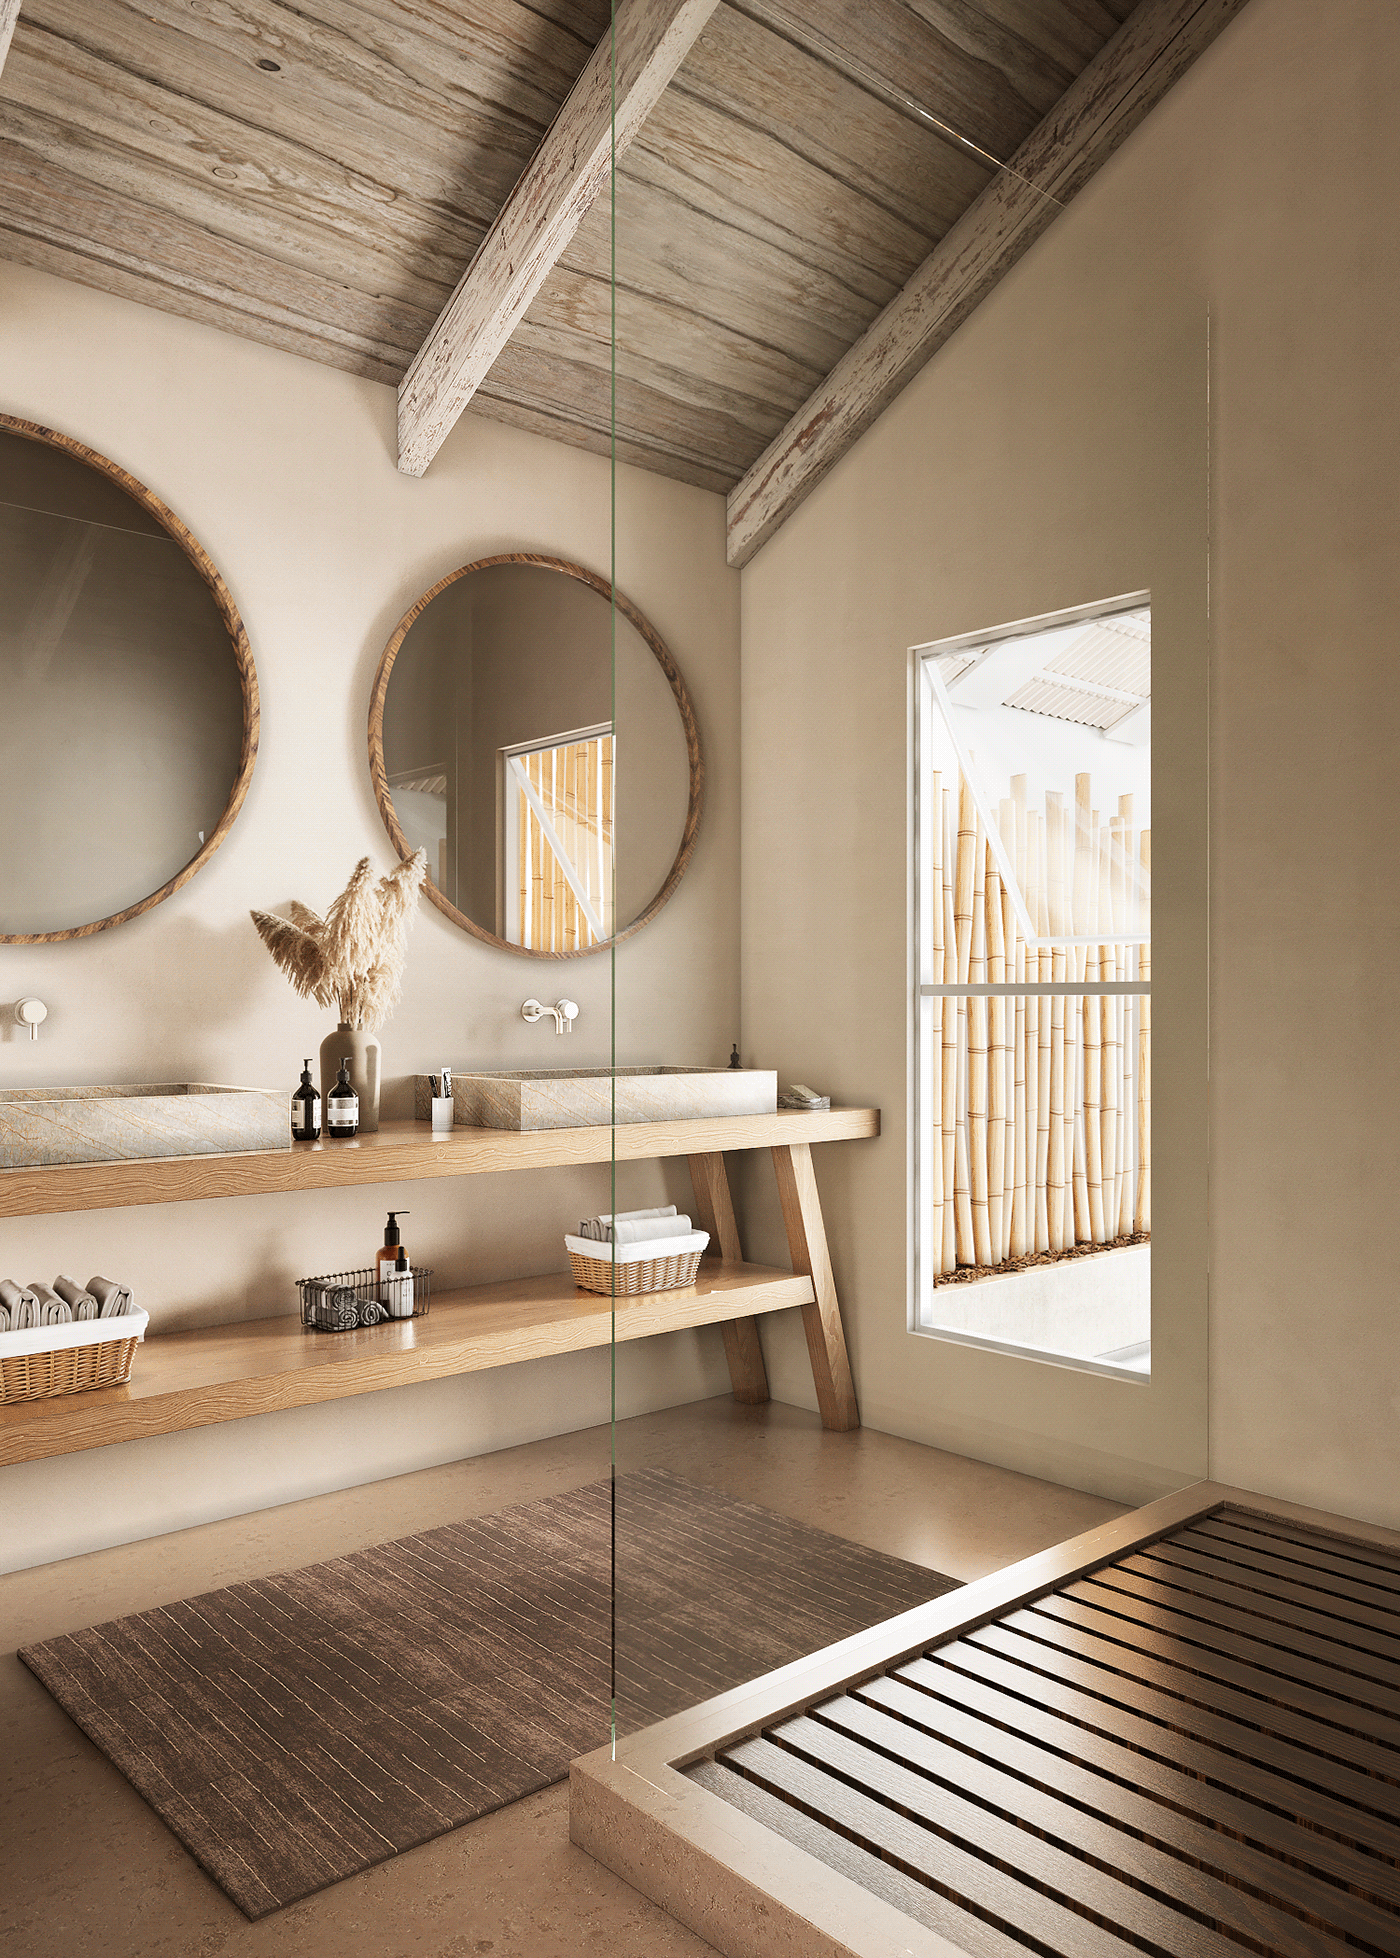 bathroom mirrors warm visualization interior design  corona wooddesign beams interiorvisualization 3dsmax